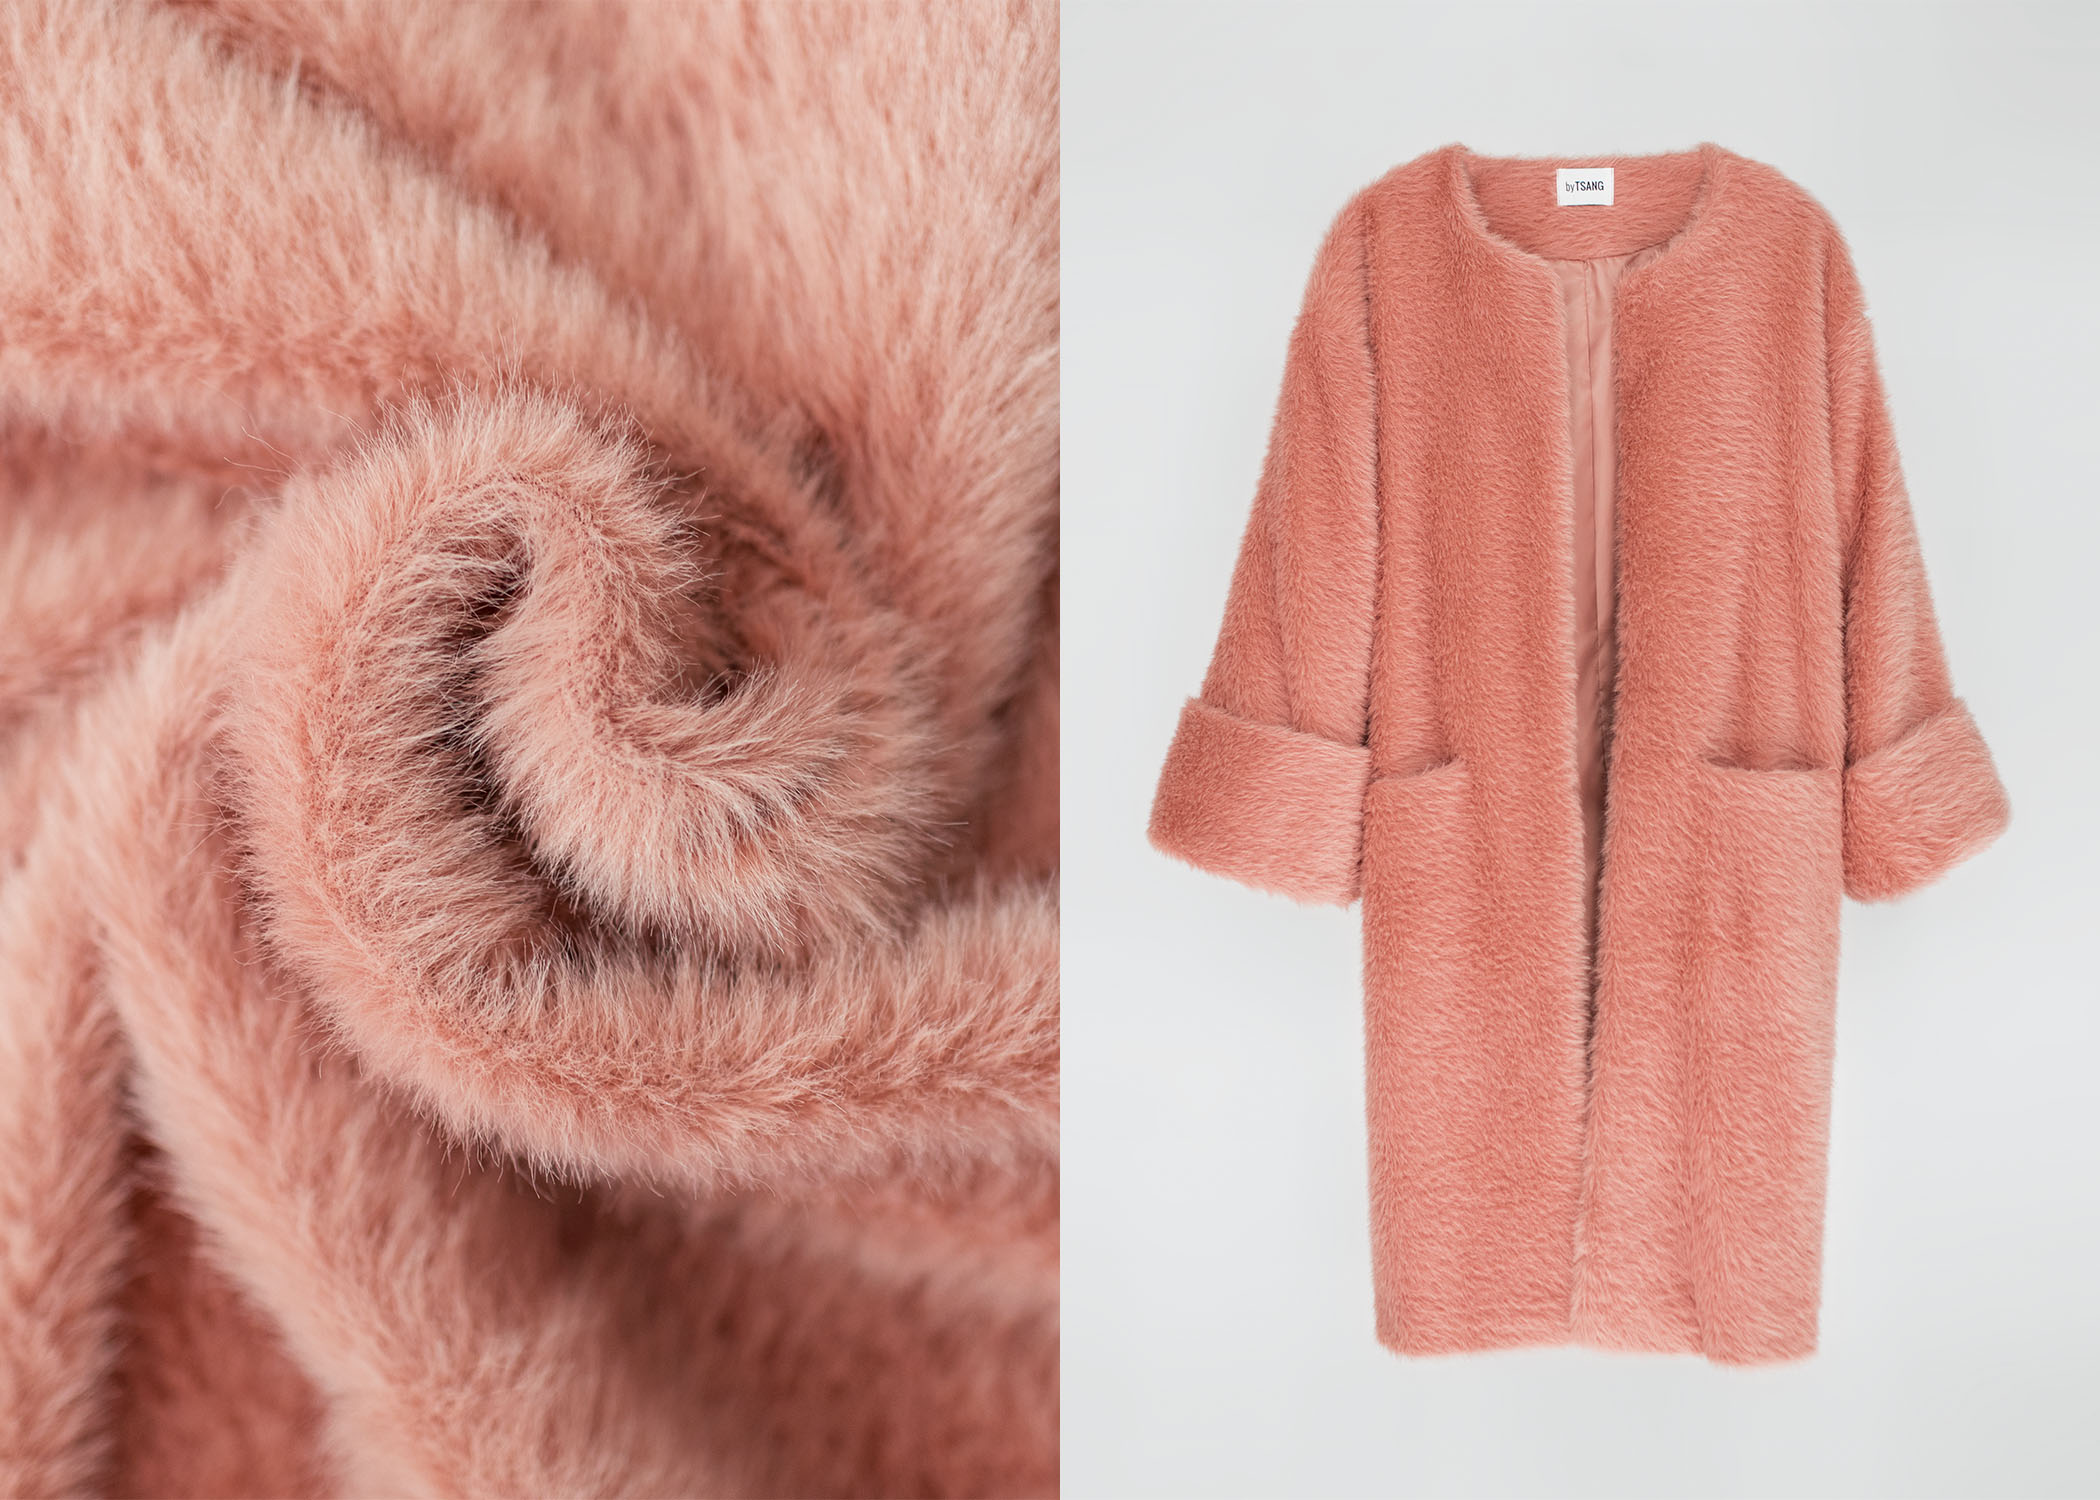 byTSANG season II fuzzy II cardigan coat in rose pink